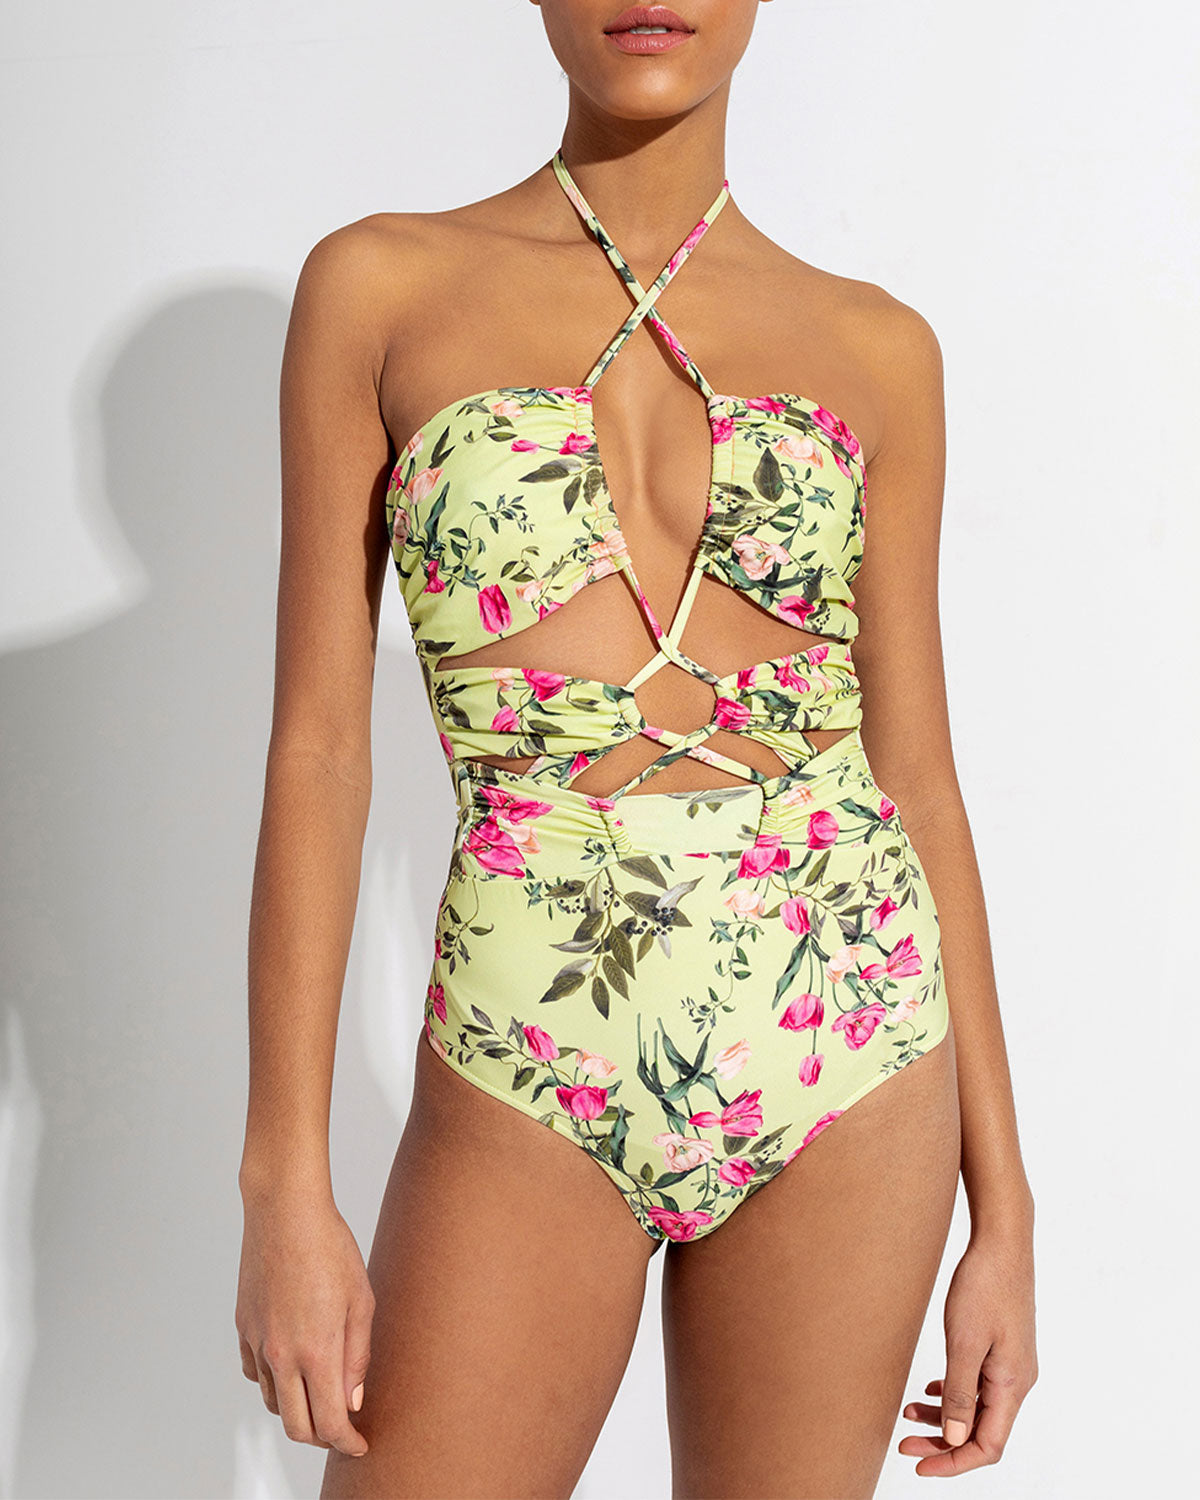 Fashion Floral Print Beach Bikini Set